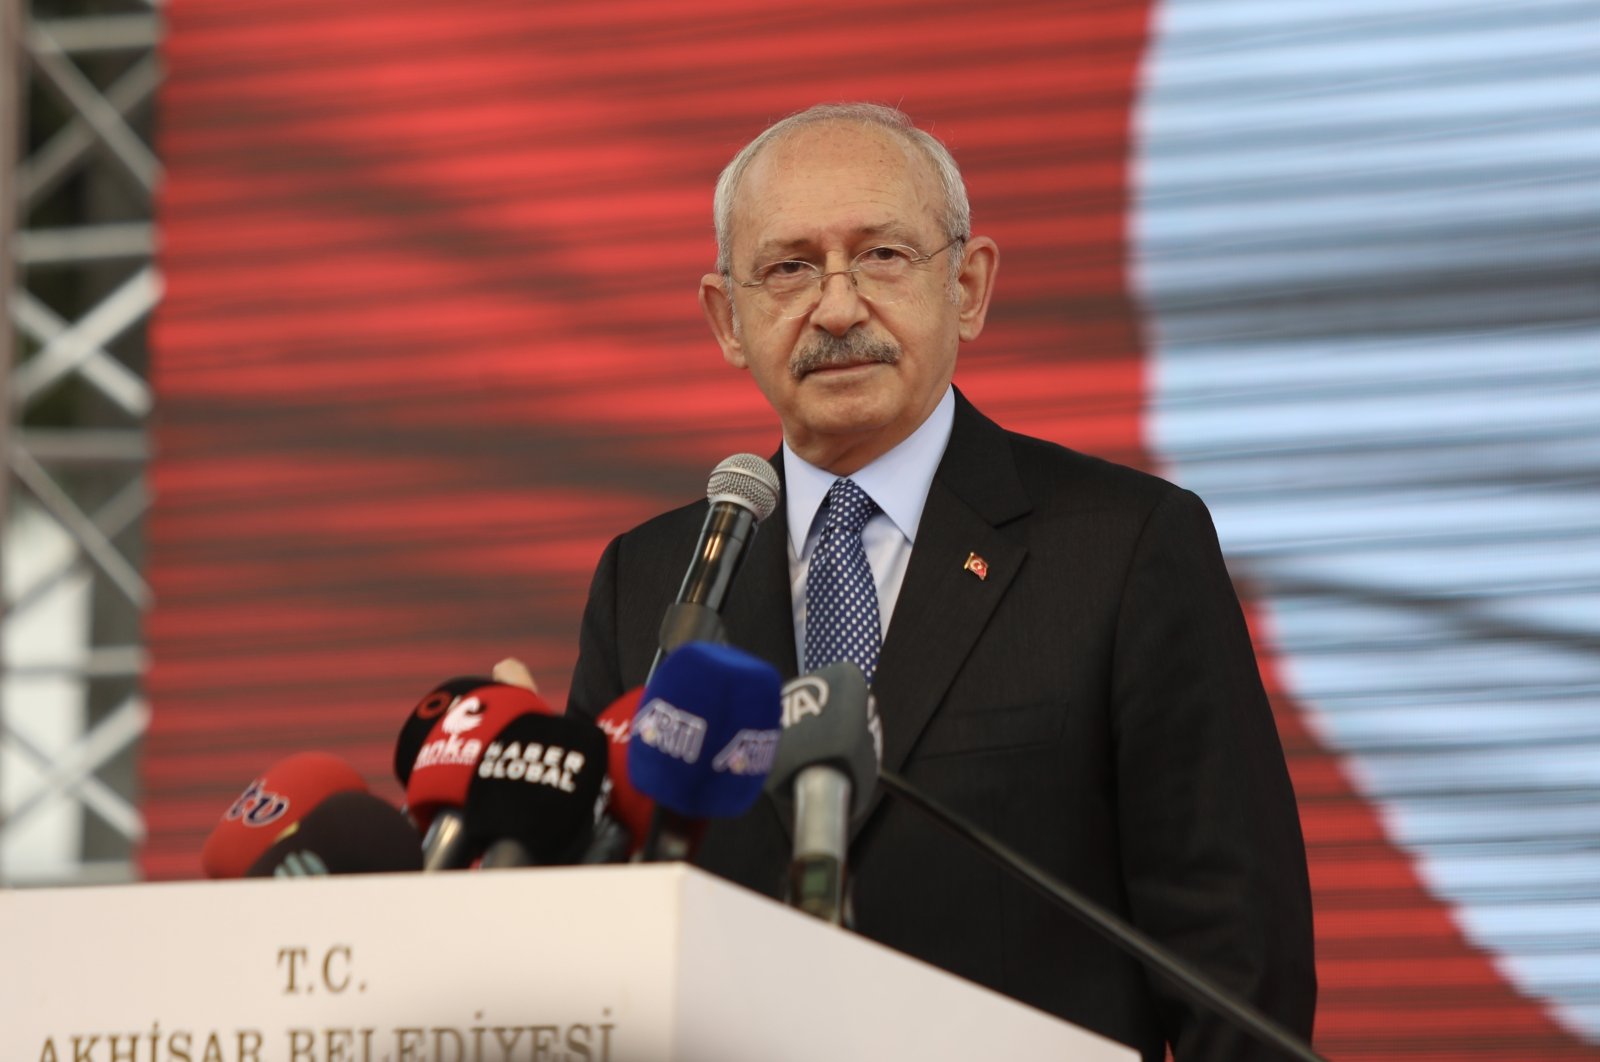 CHP leader Kemal Kılıçdaroğlu speaks at an event in Manisa, Turkey, March 31, 2022. (AA)